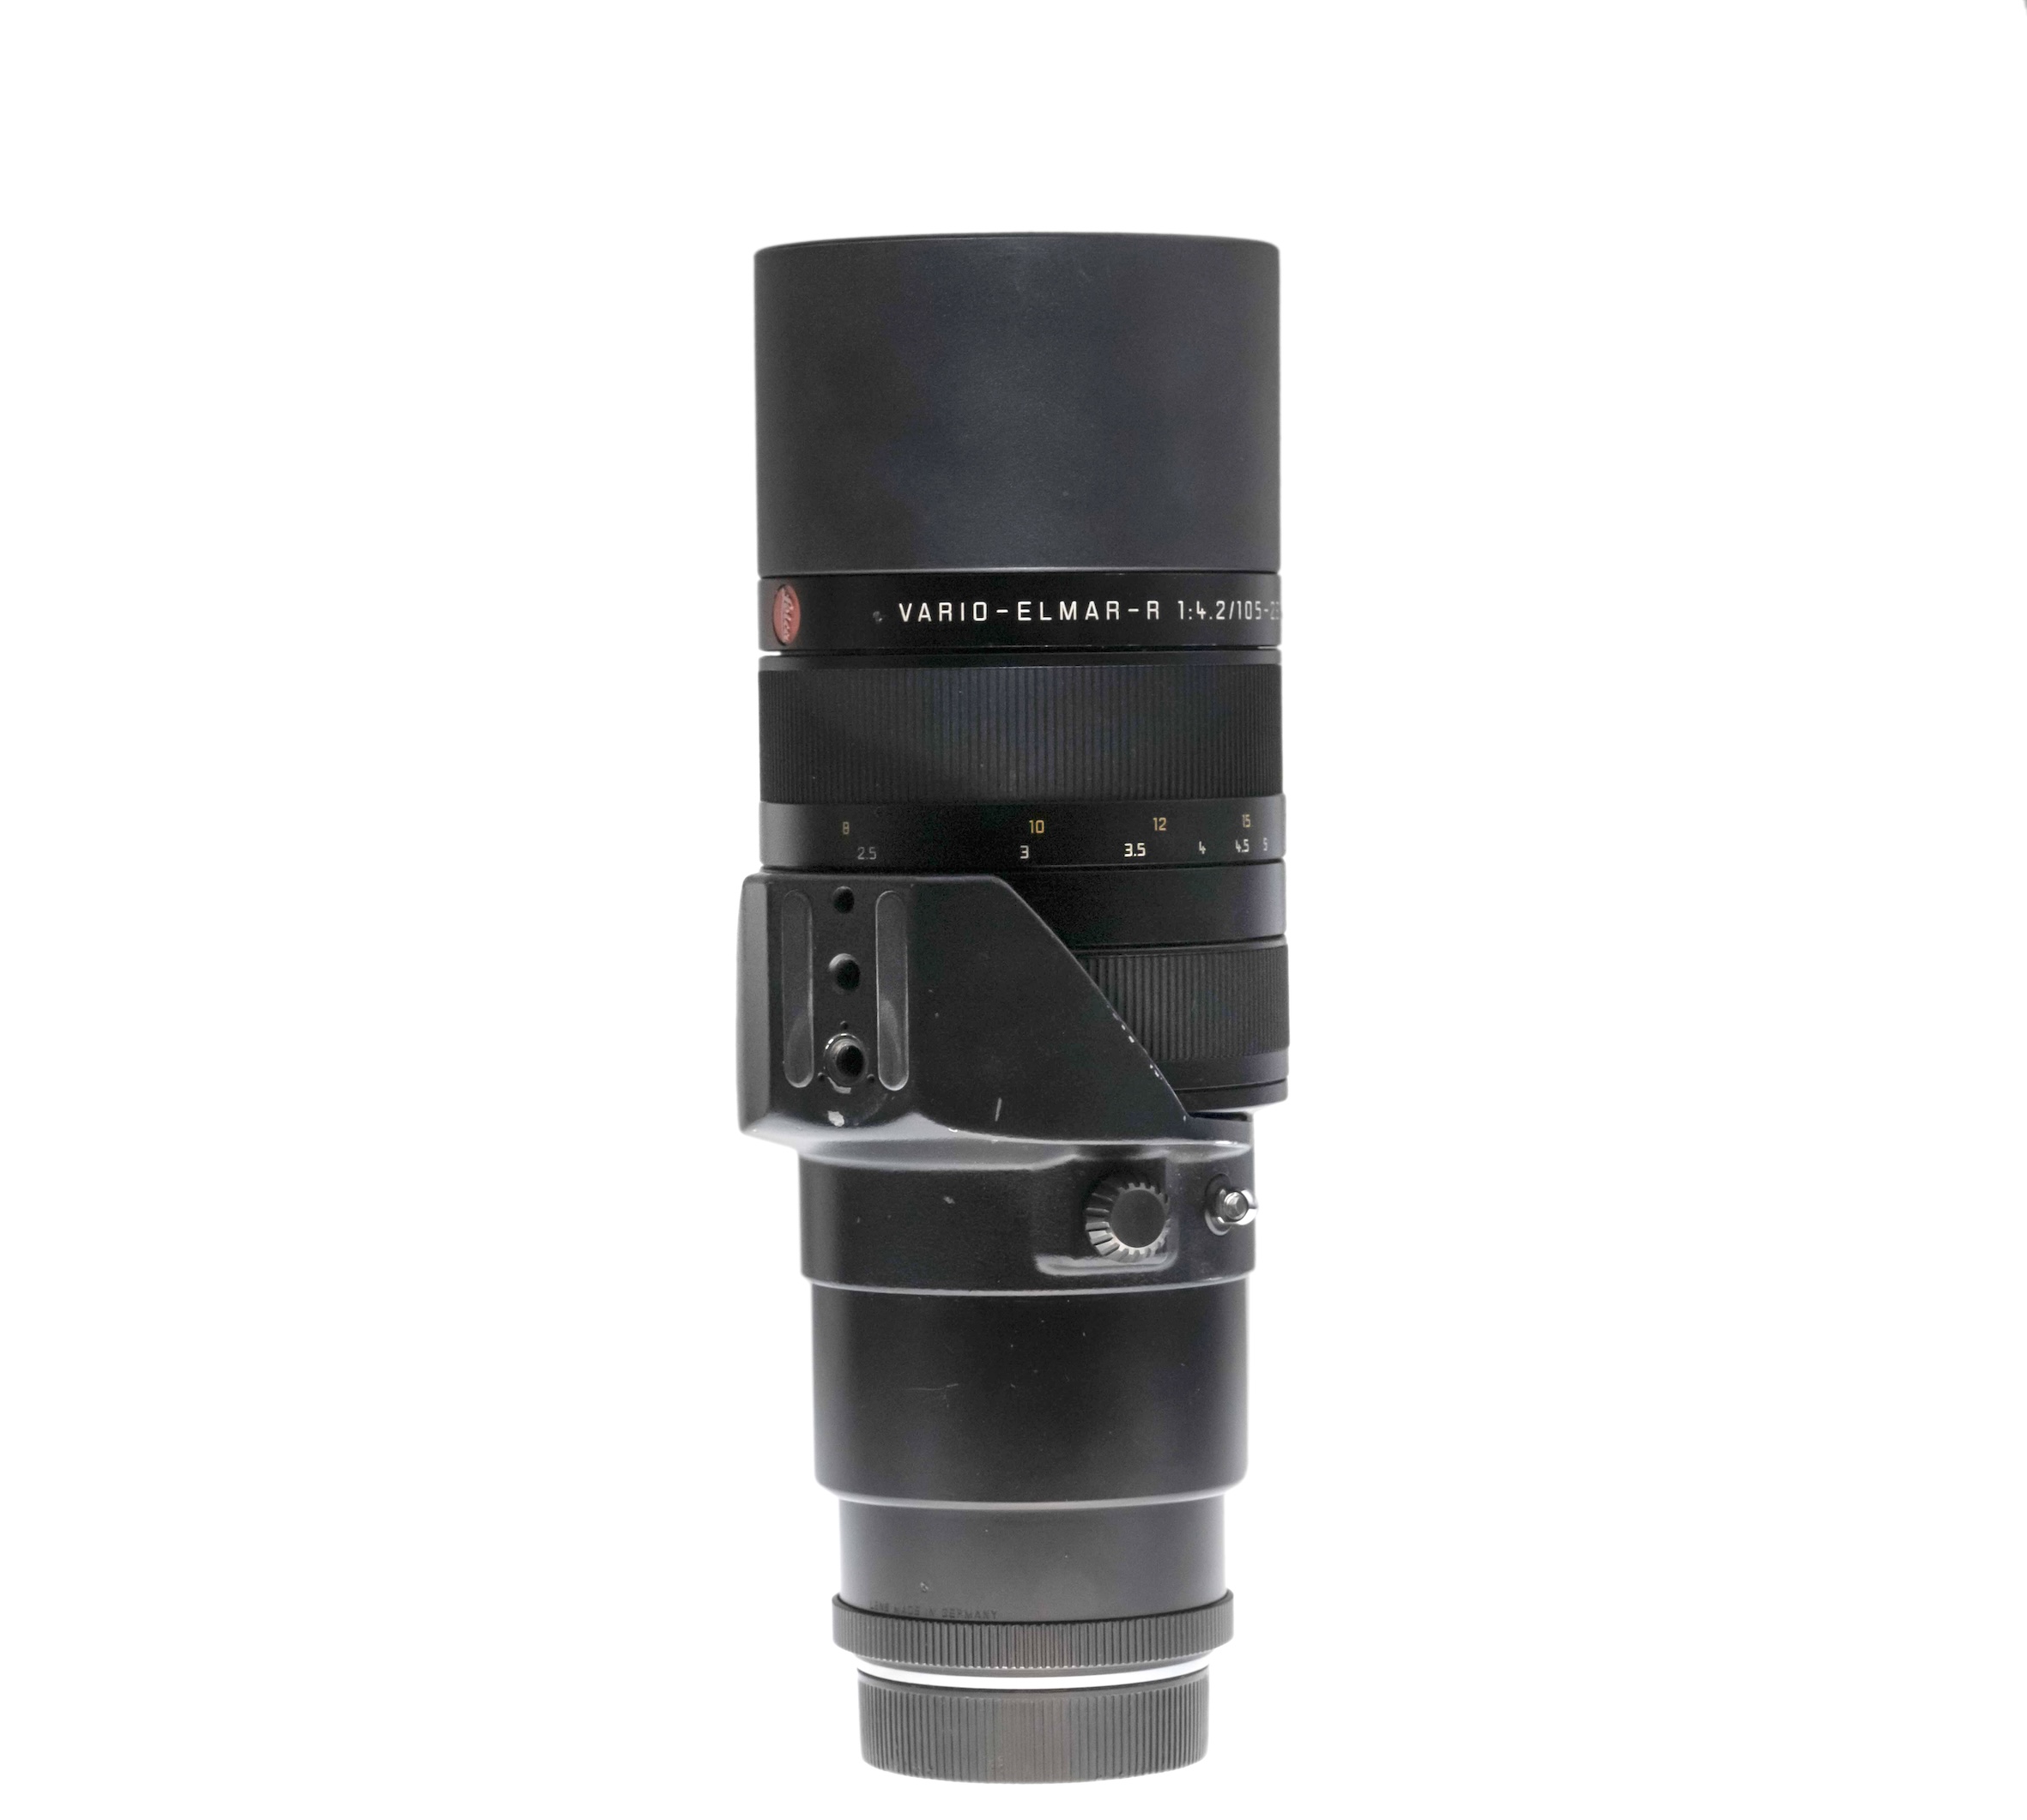  Leica Vario-Elmar-R 1:4,2/105-280mm